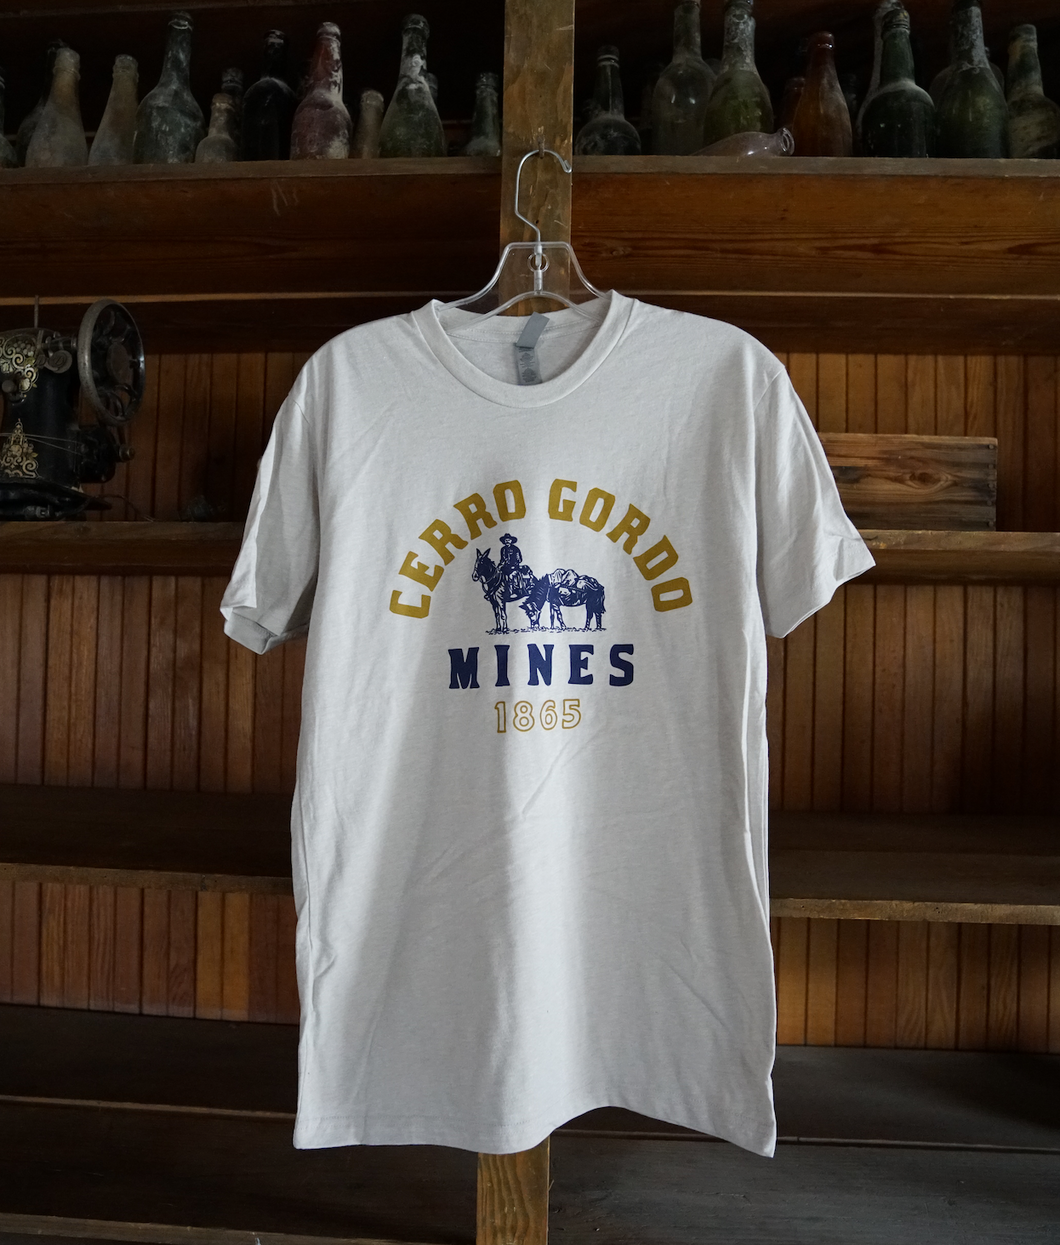 Cerro Gordo Mines T-Shirt